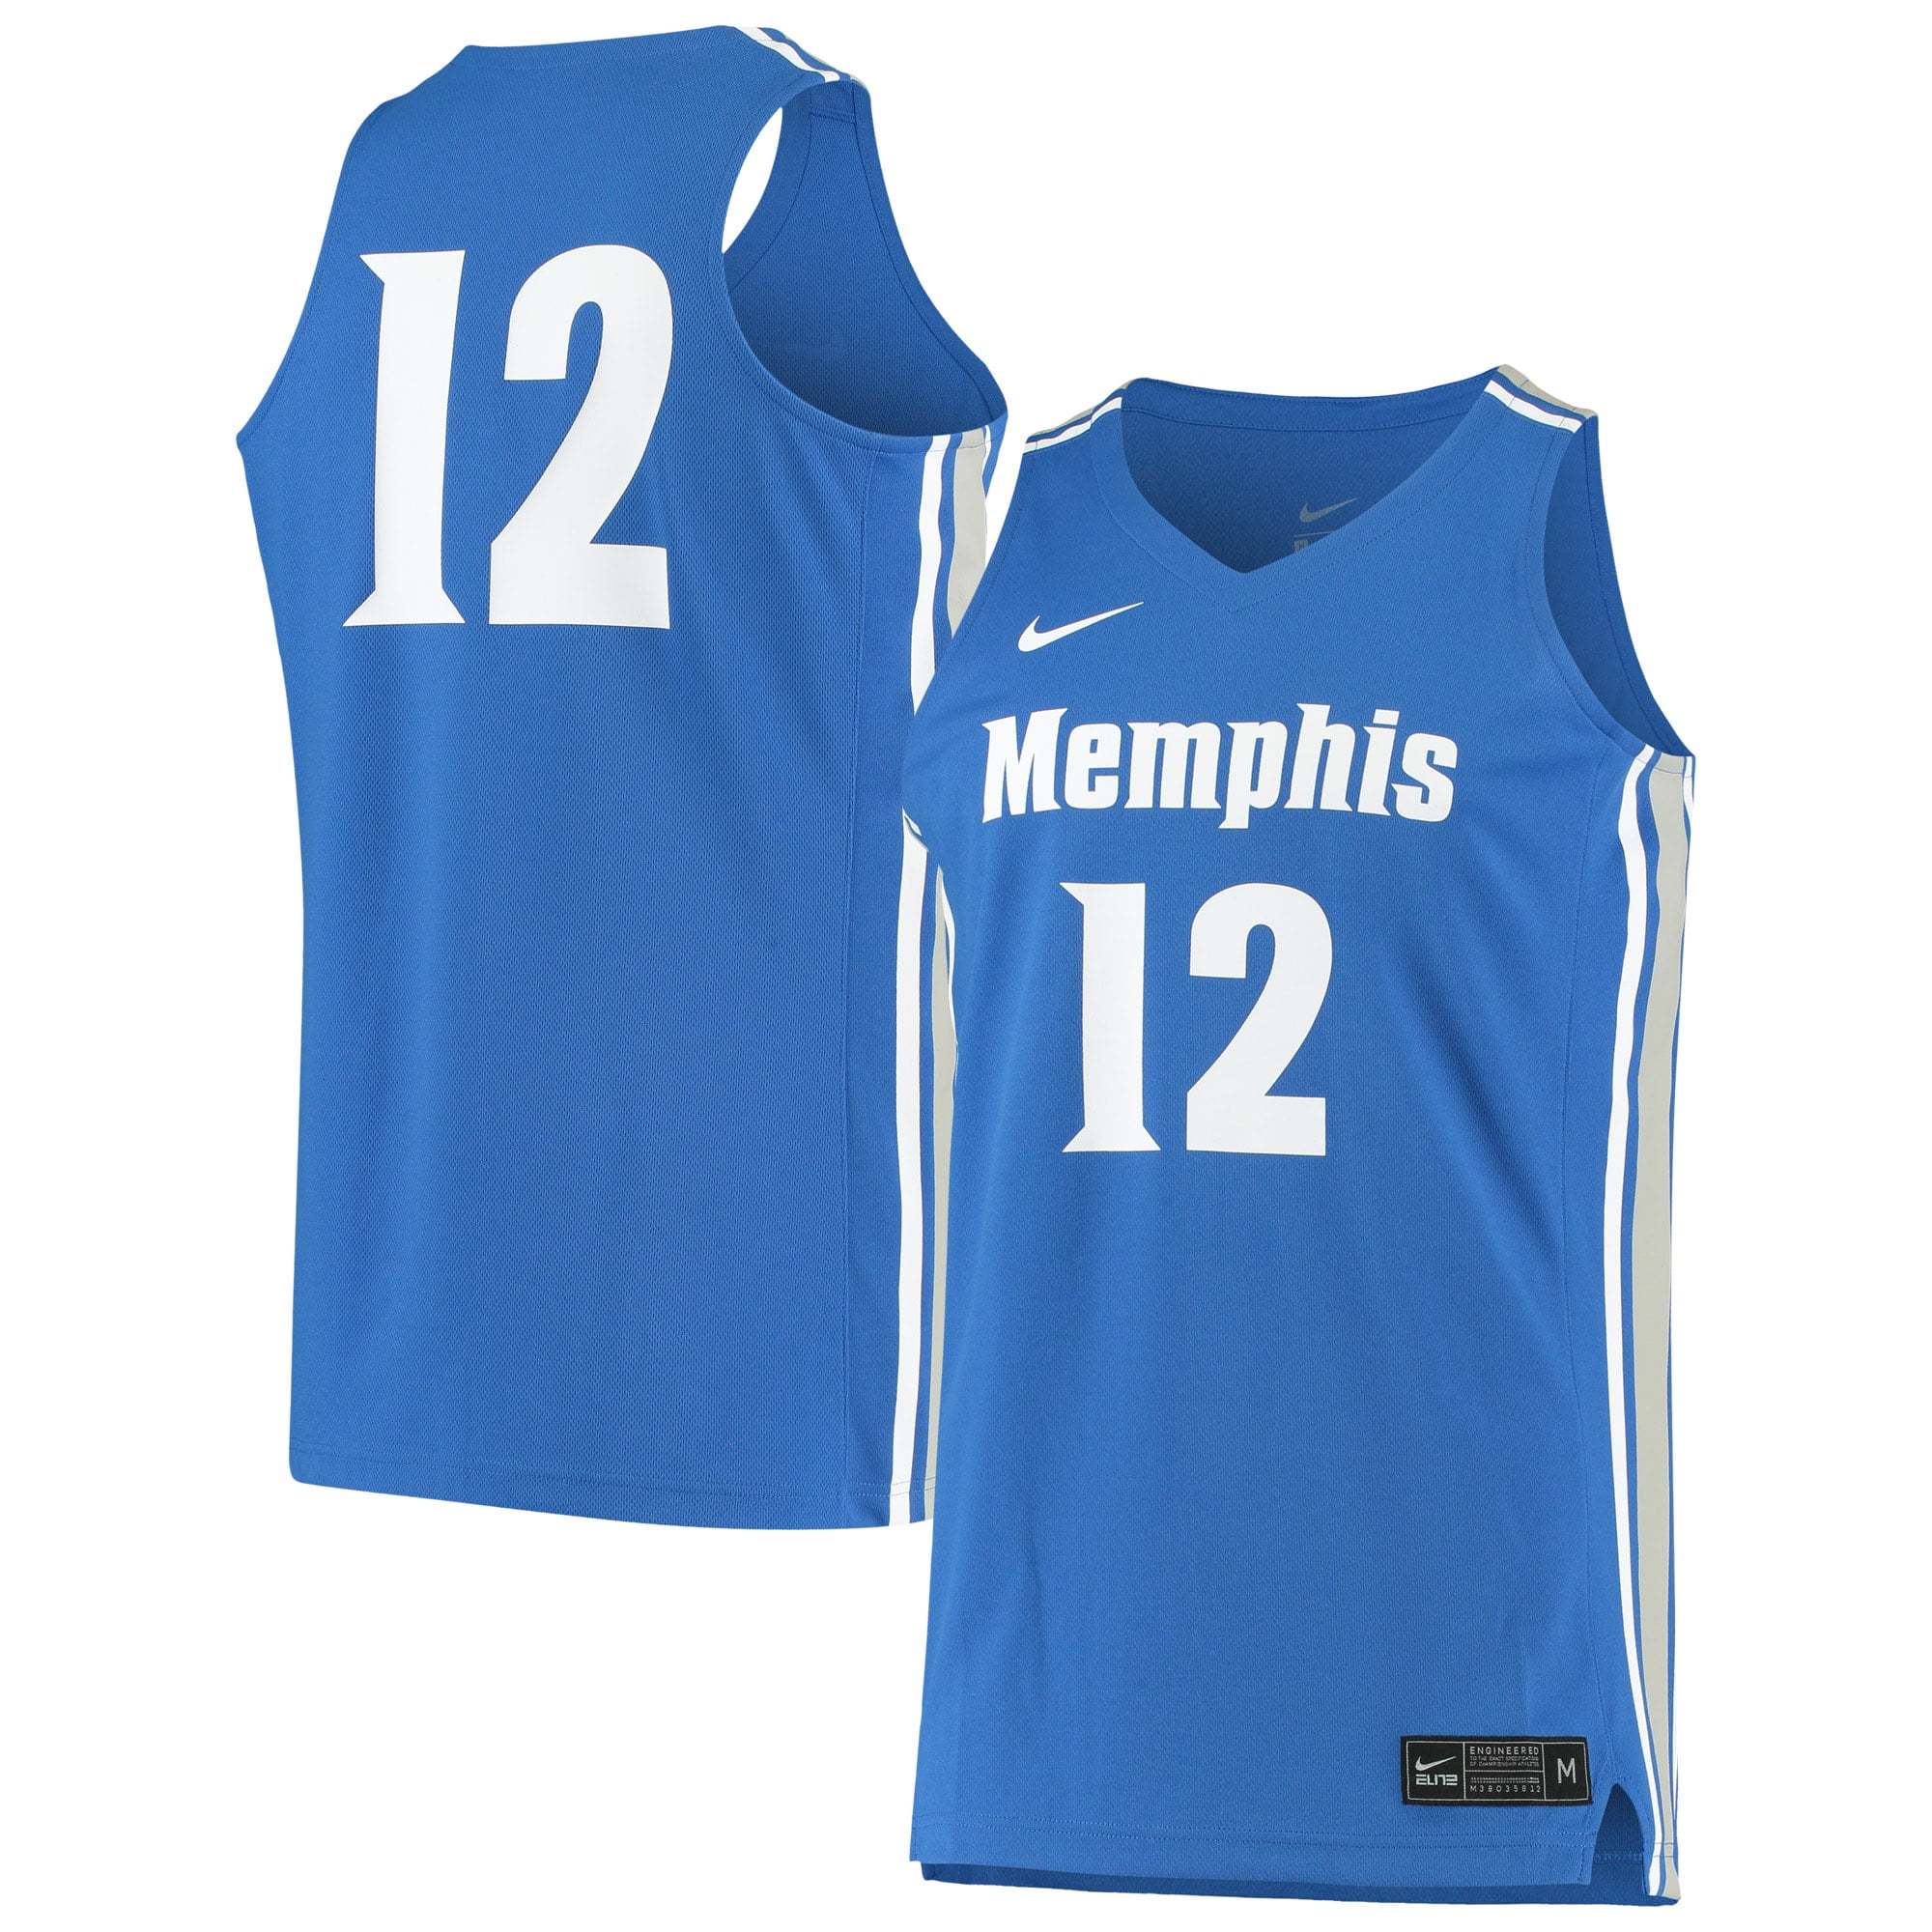 memphis tigers basketball jersey